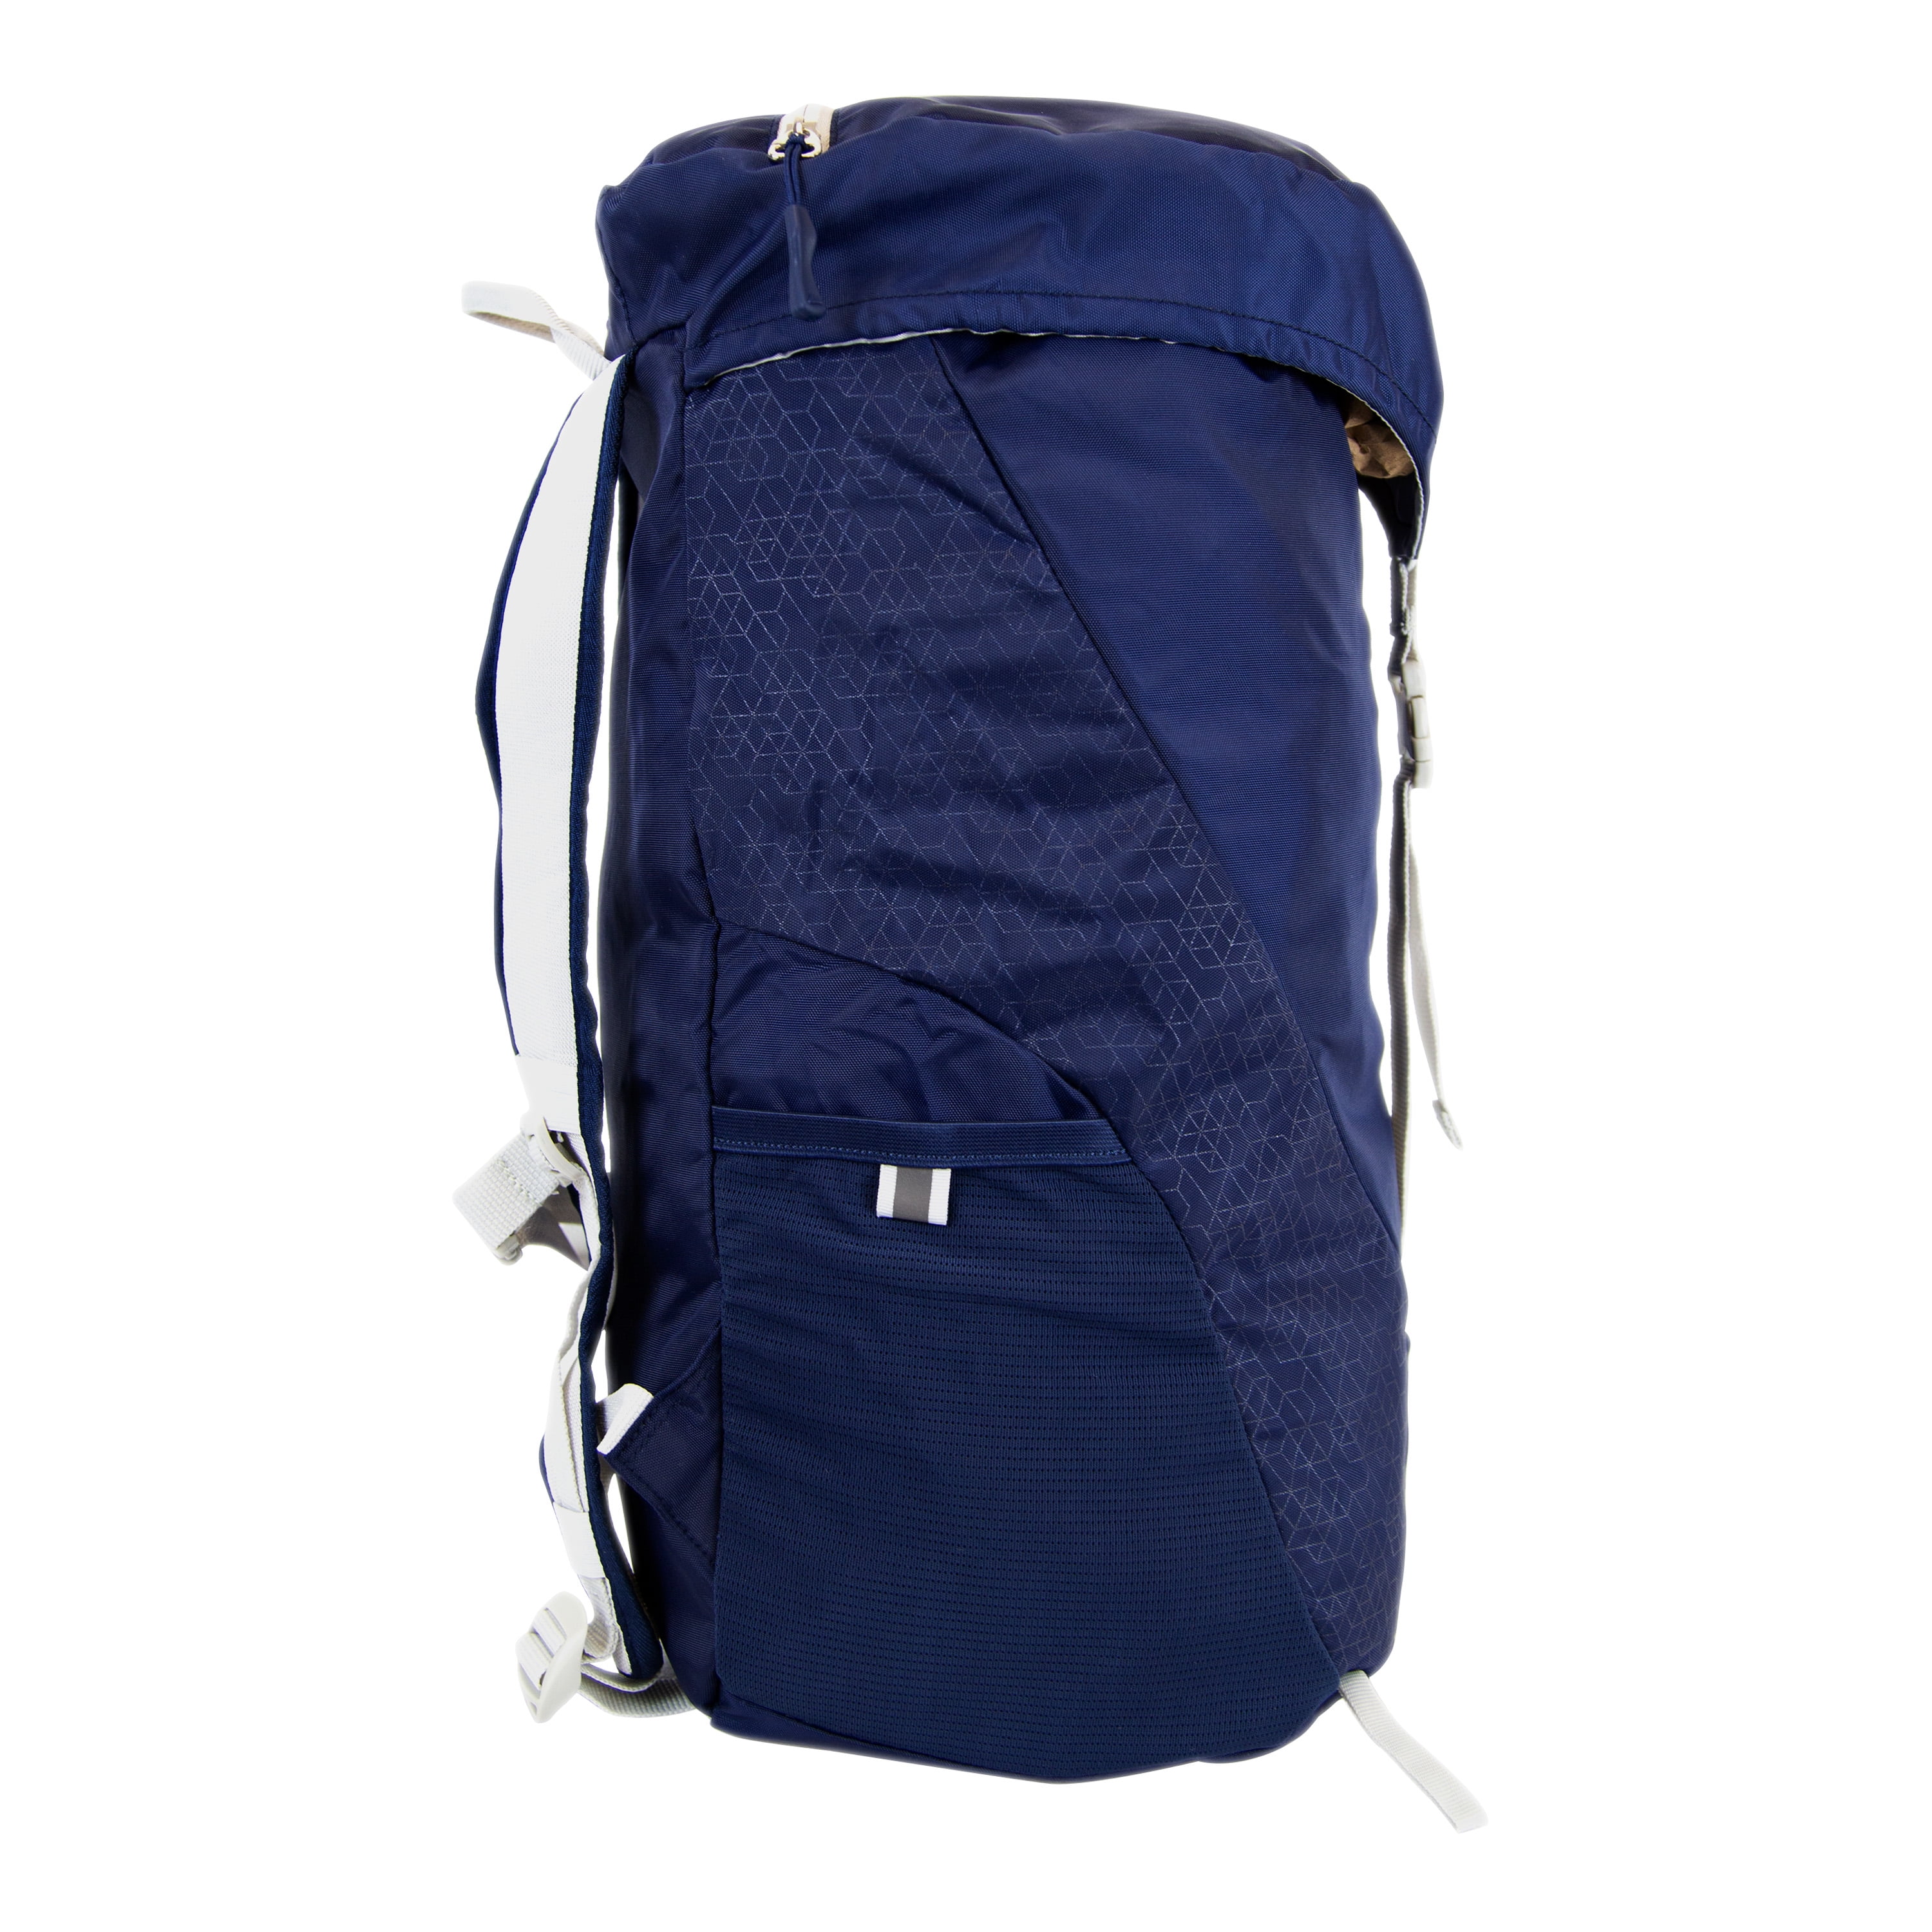 Ozark Trail 20.5 Liter Hiking, Camping, Travel, Lightweight Backpack, Fjord Blue, Unisex